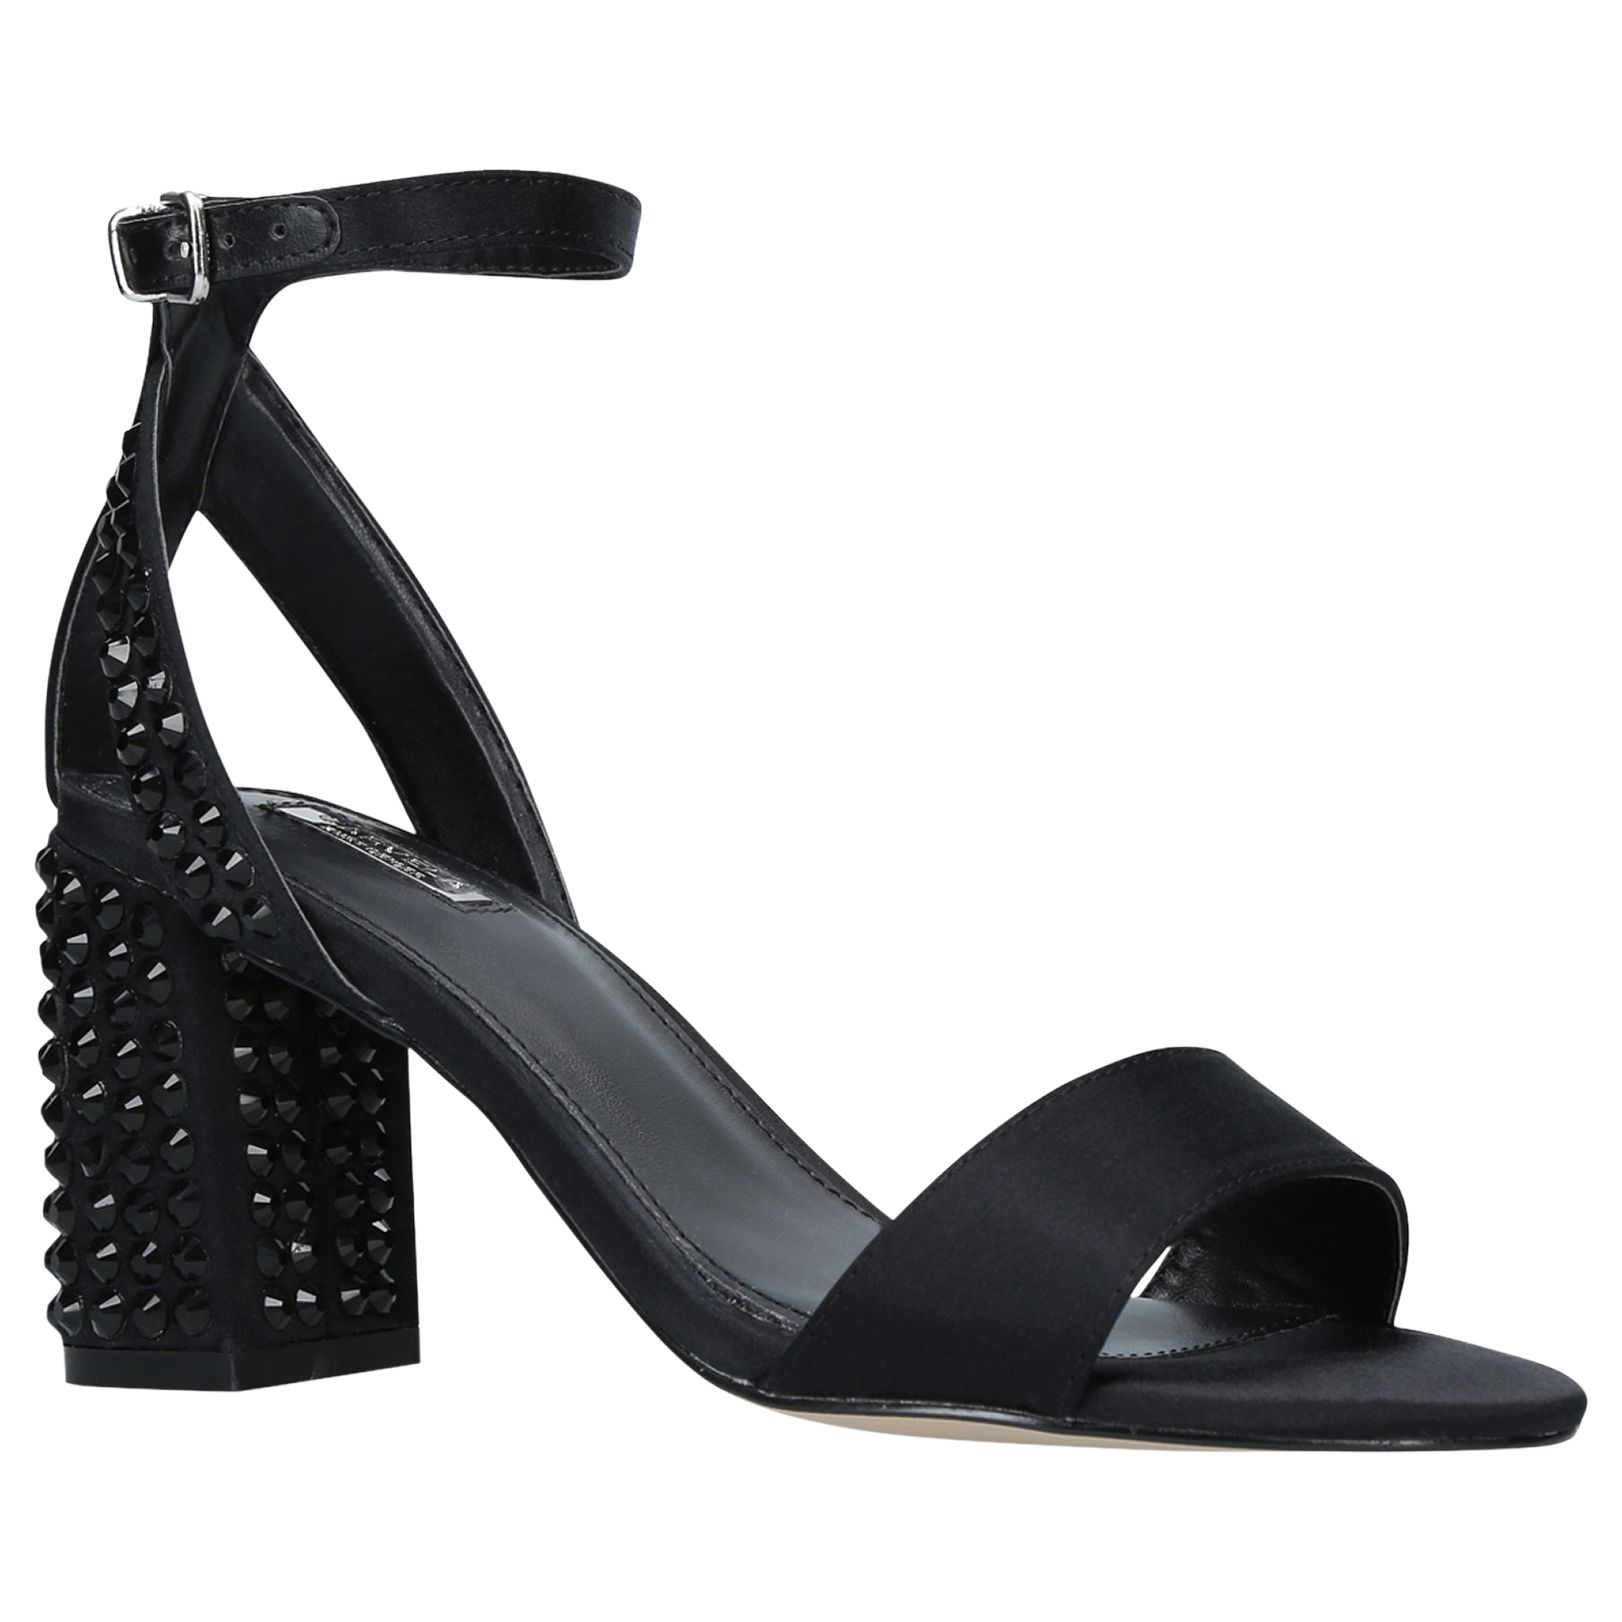 Carvela Gianni 2 Studded Block Heeled Sandals, Black